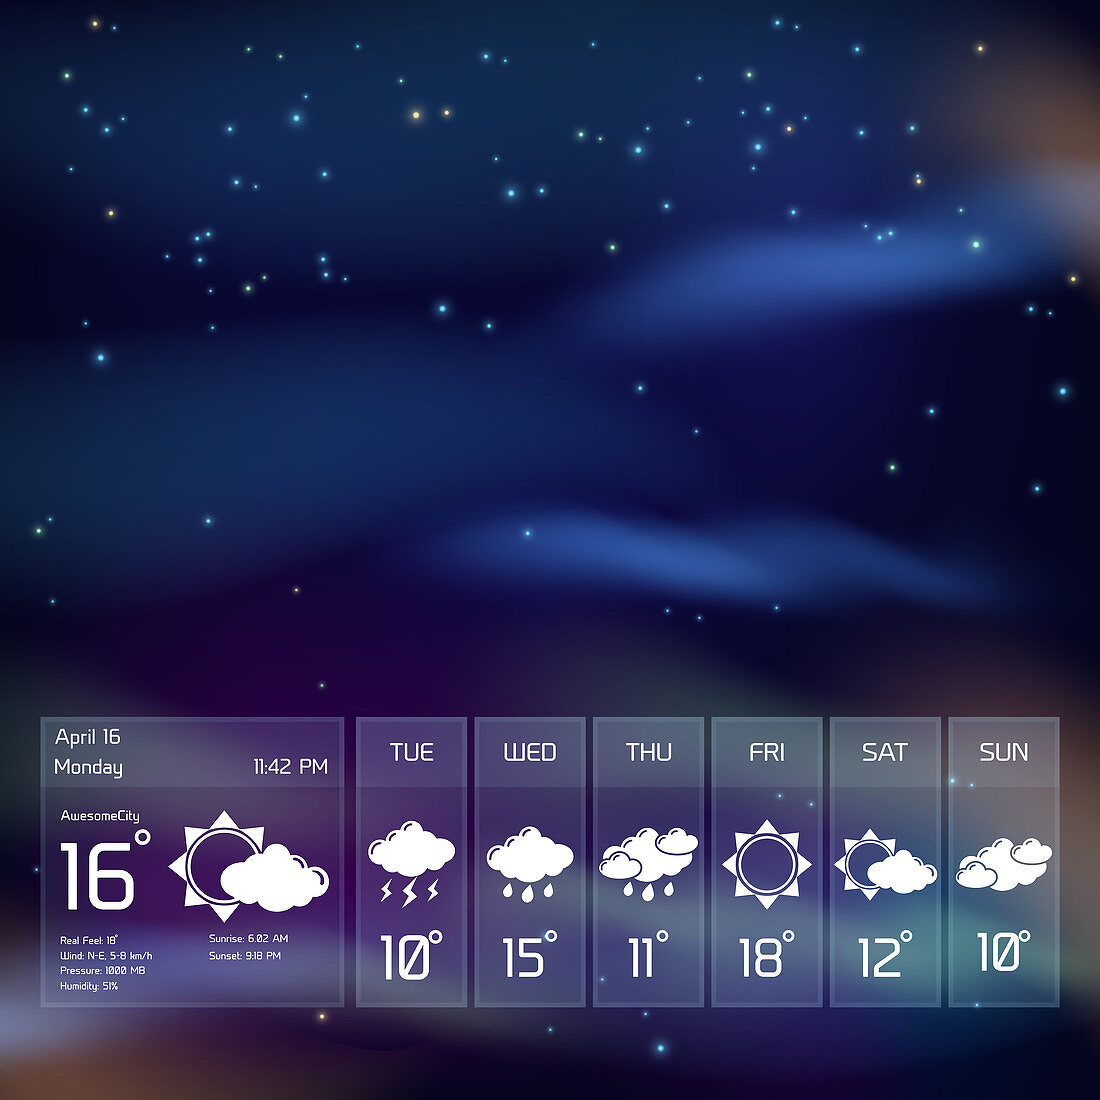 Weather forecast widget, illustration